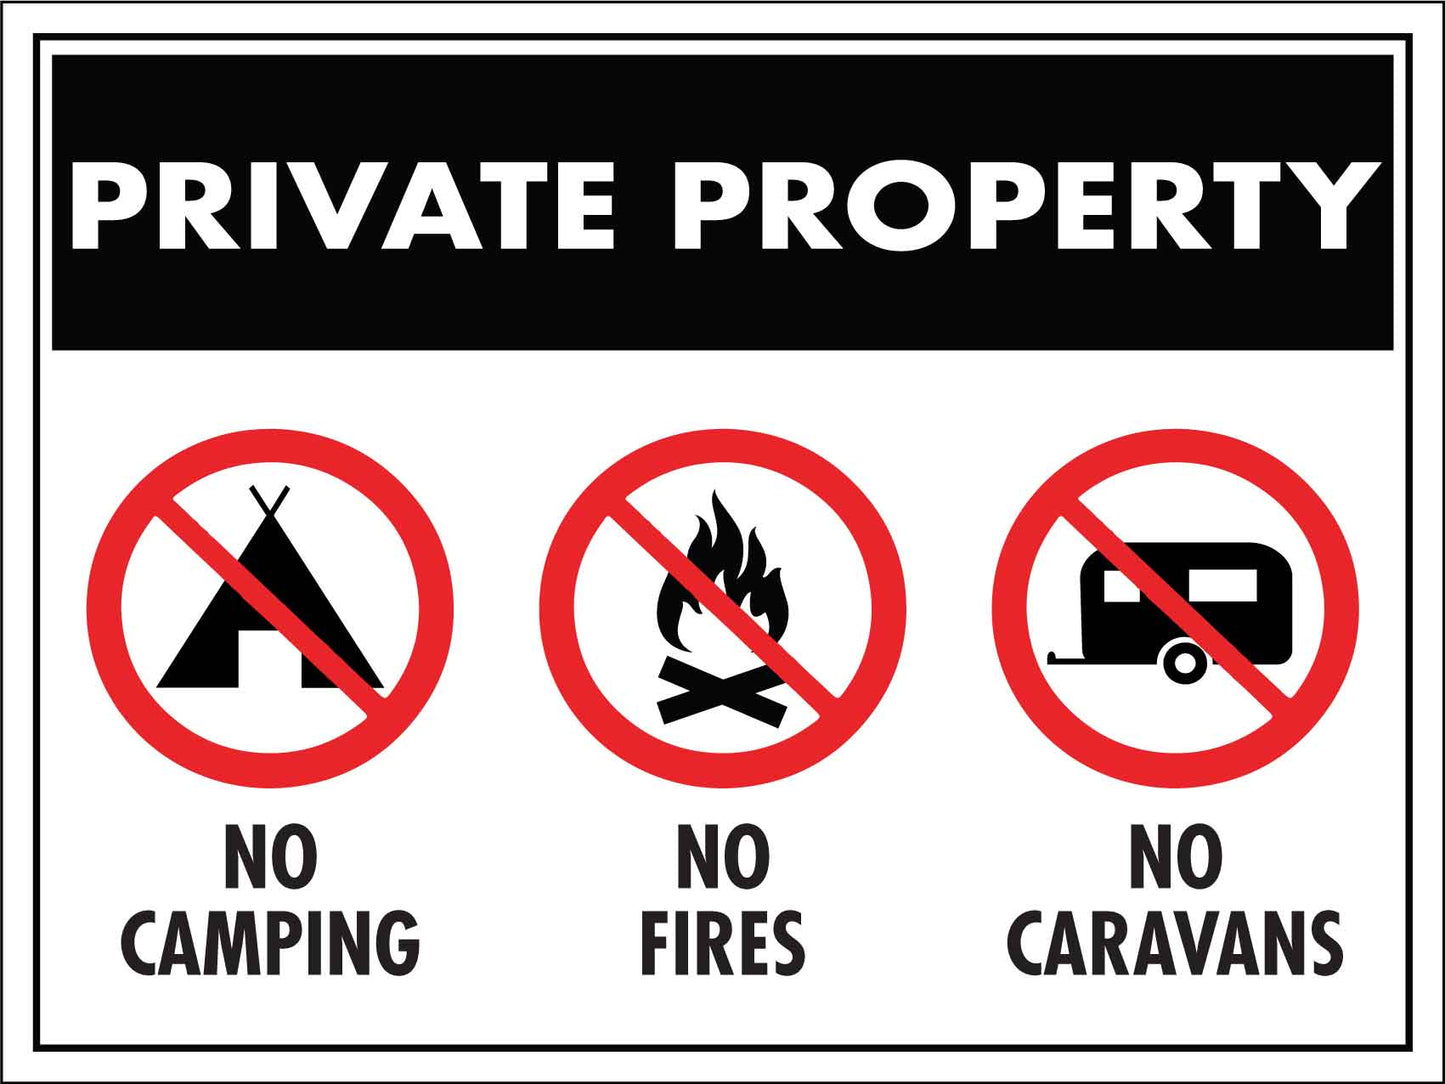 Private Property Camping No Camping No Fires No Caravans Sign